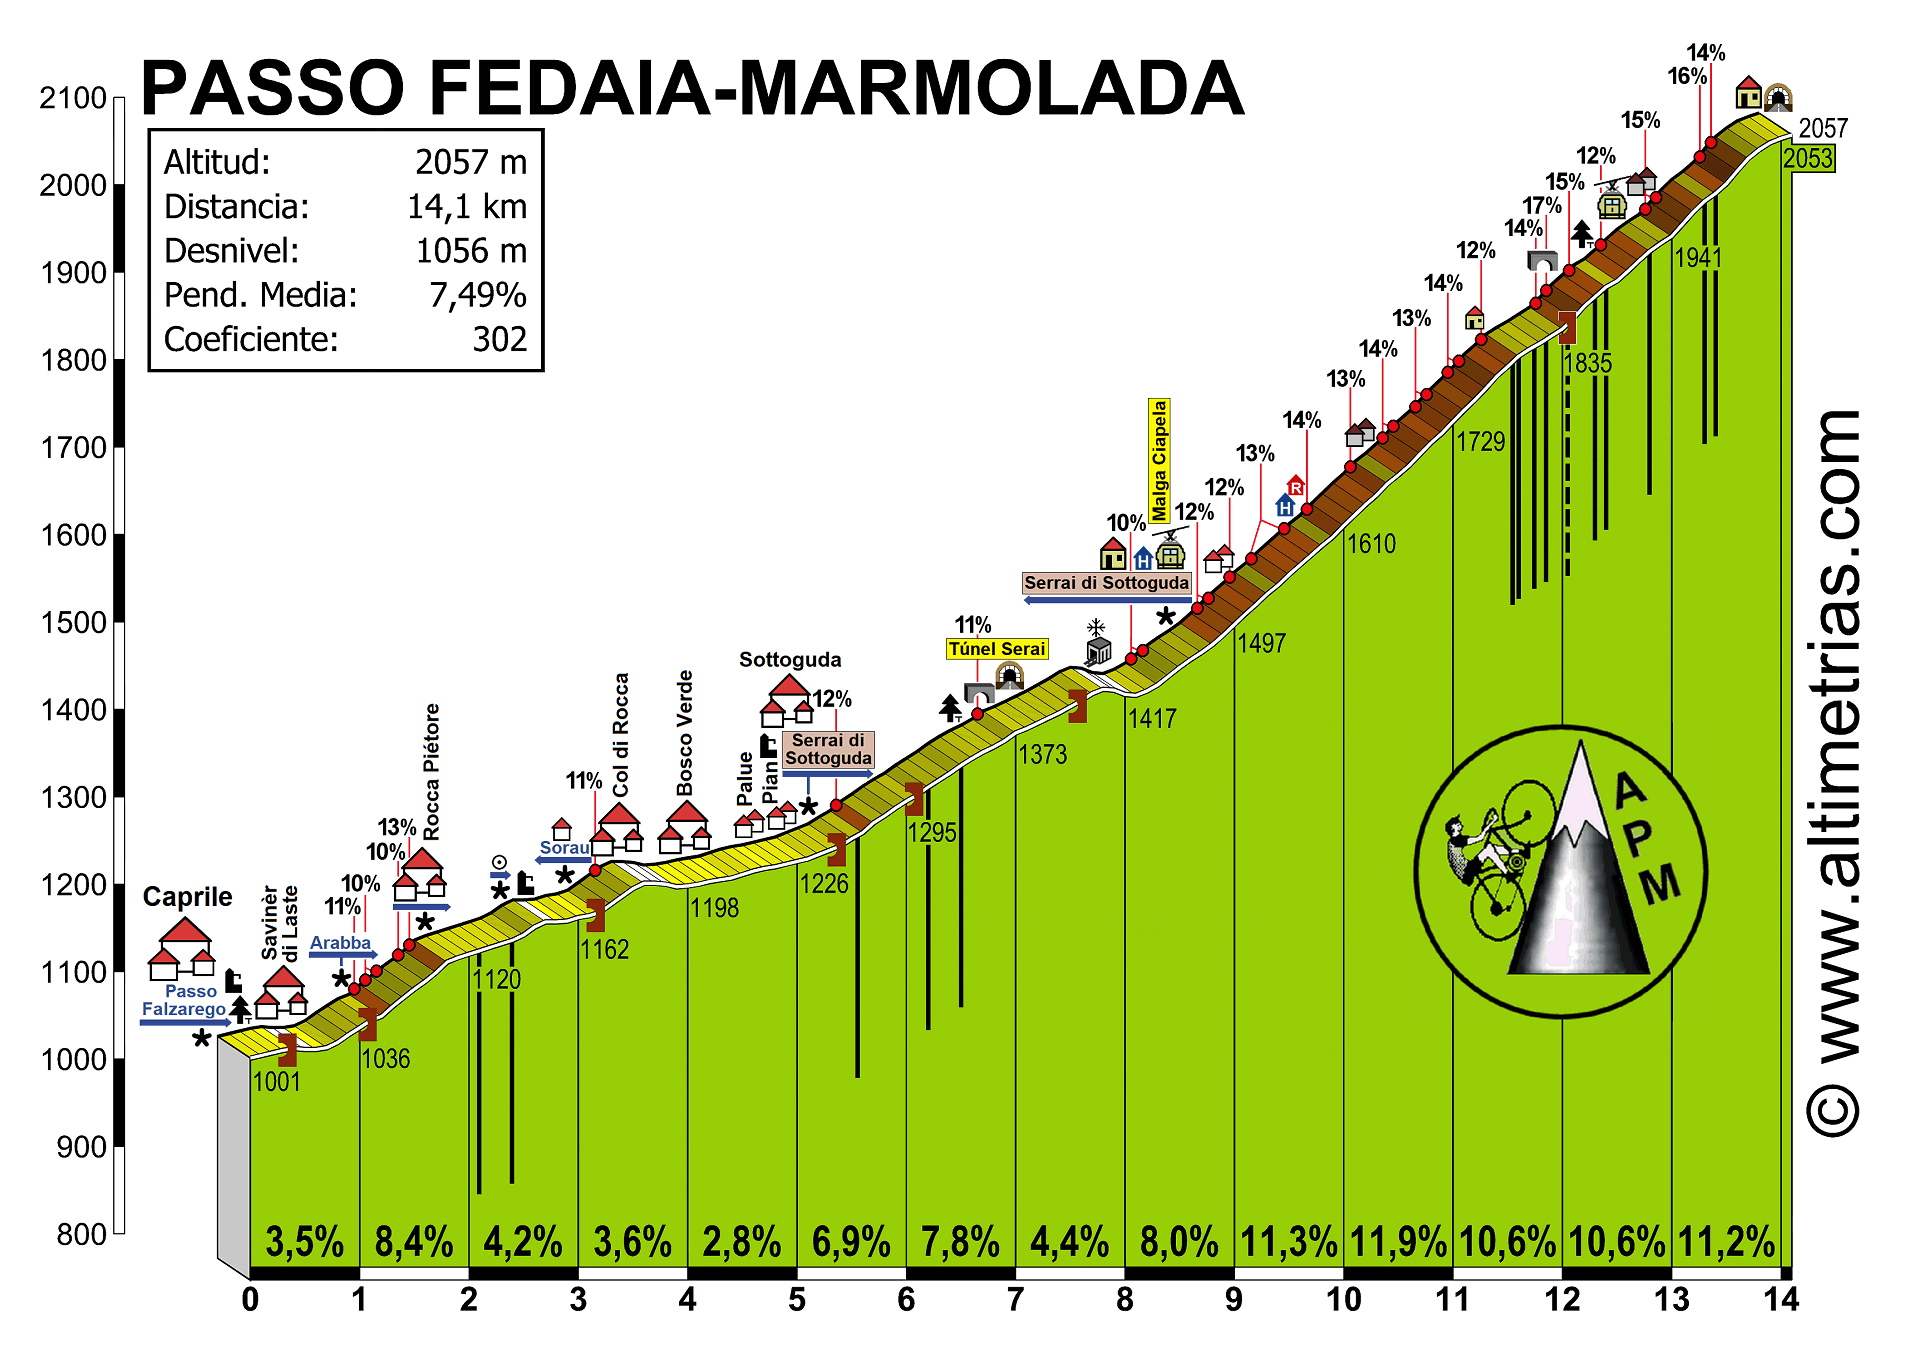 Passo Fedaia - Marmolada